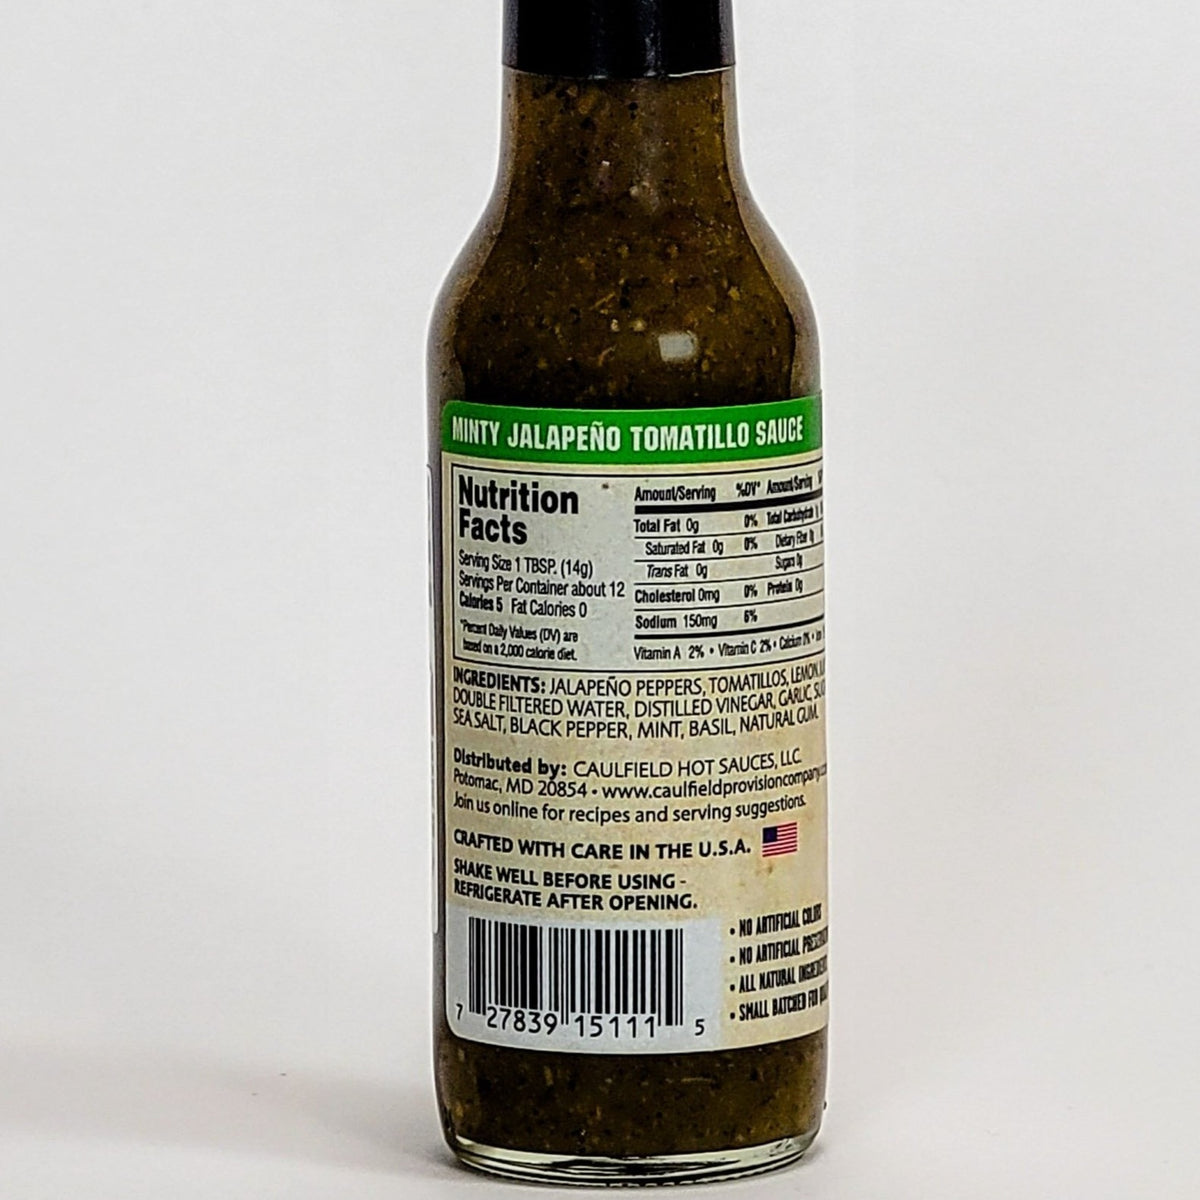 caulfield provisions minty jalapeno tomatillo sauce label description